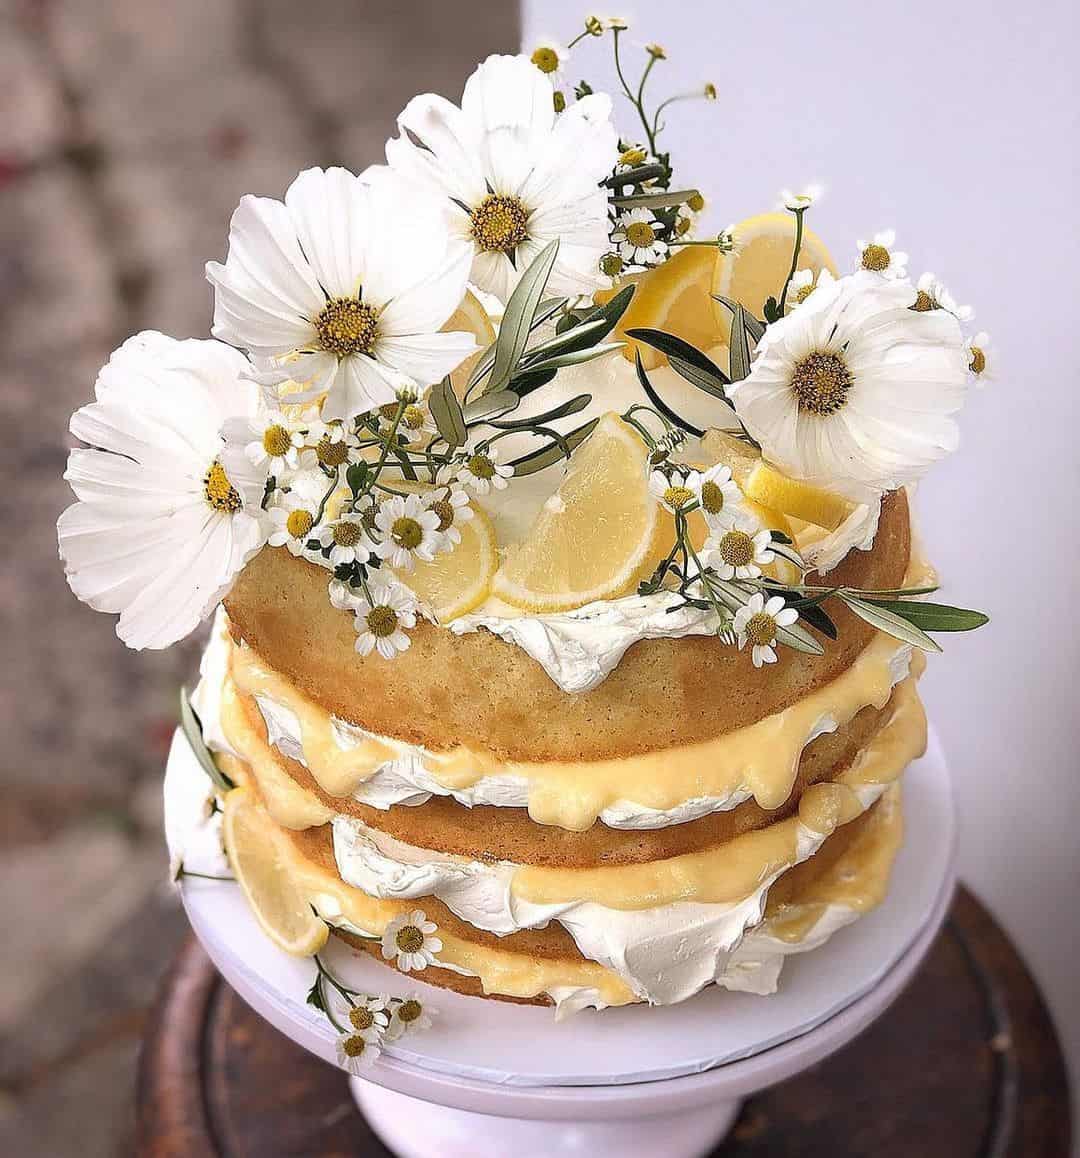 Limoncello sponge cake with fresh flowers